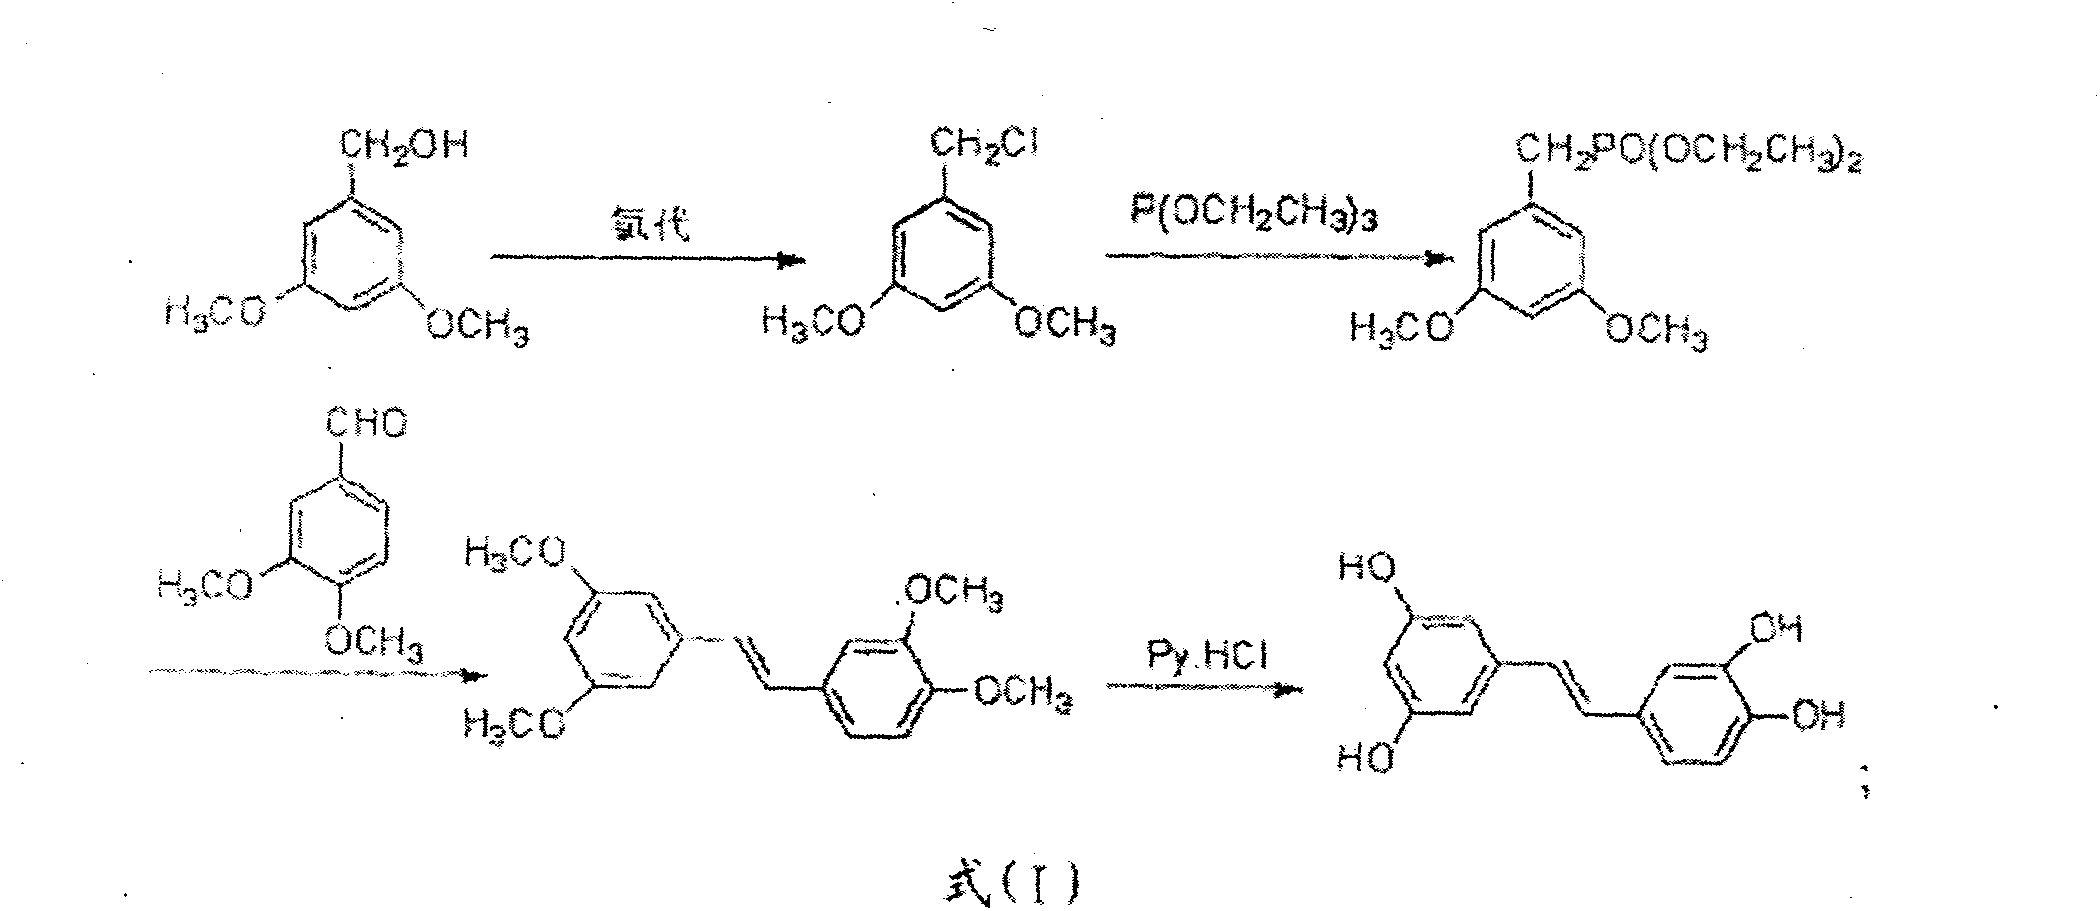 Method for synthesizing stilbenoids by hydrochloric acid heterogeneous chlorination